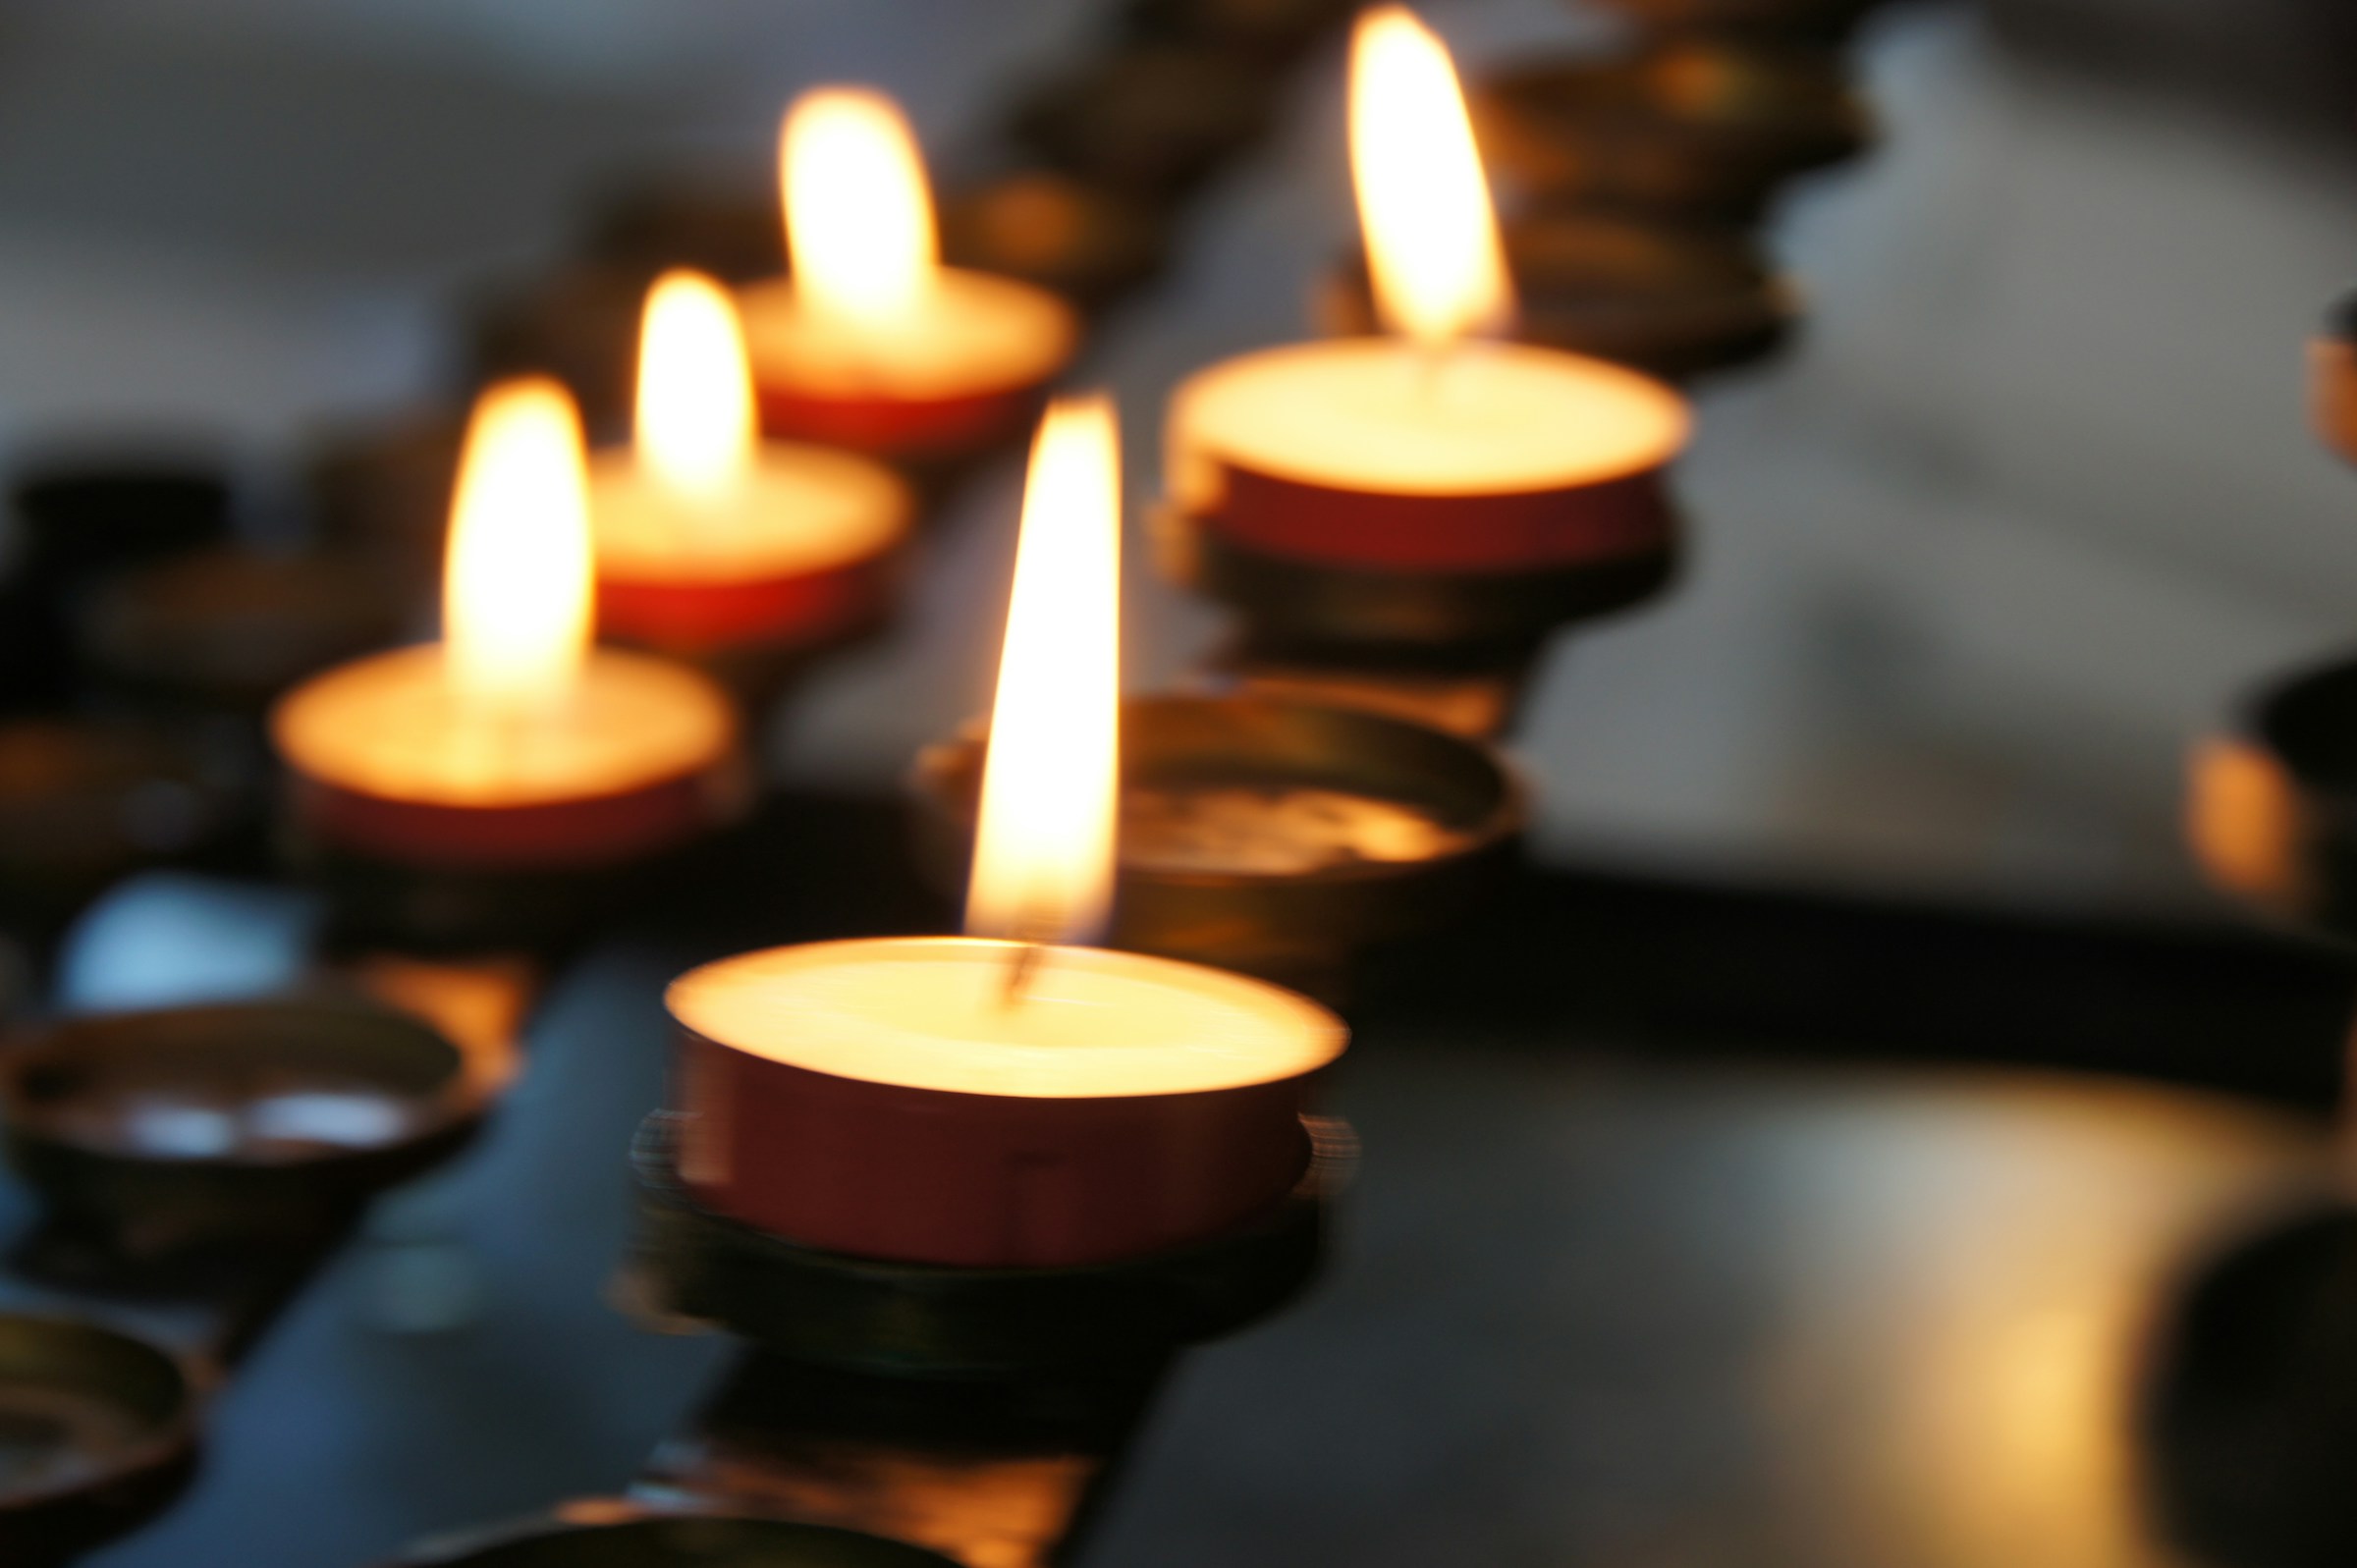 Lit candles on a surface | Source: Unsplash